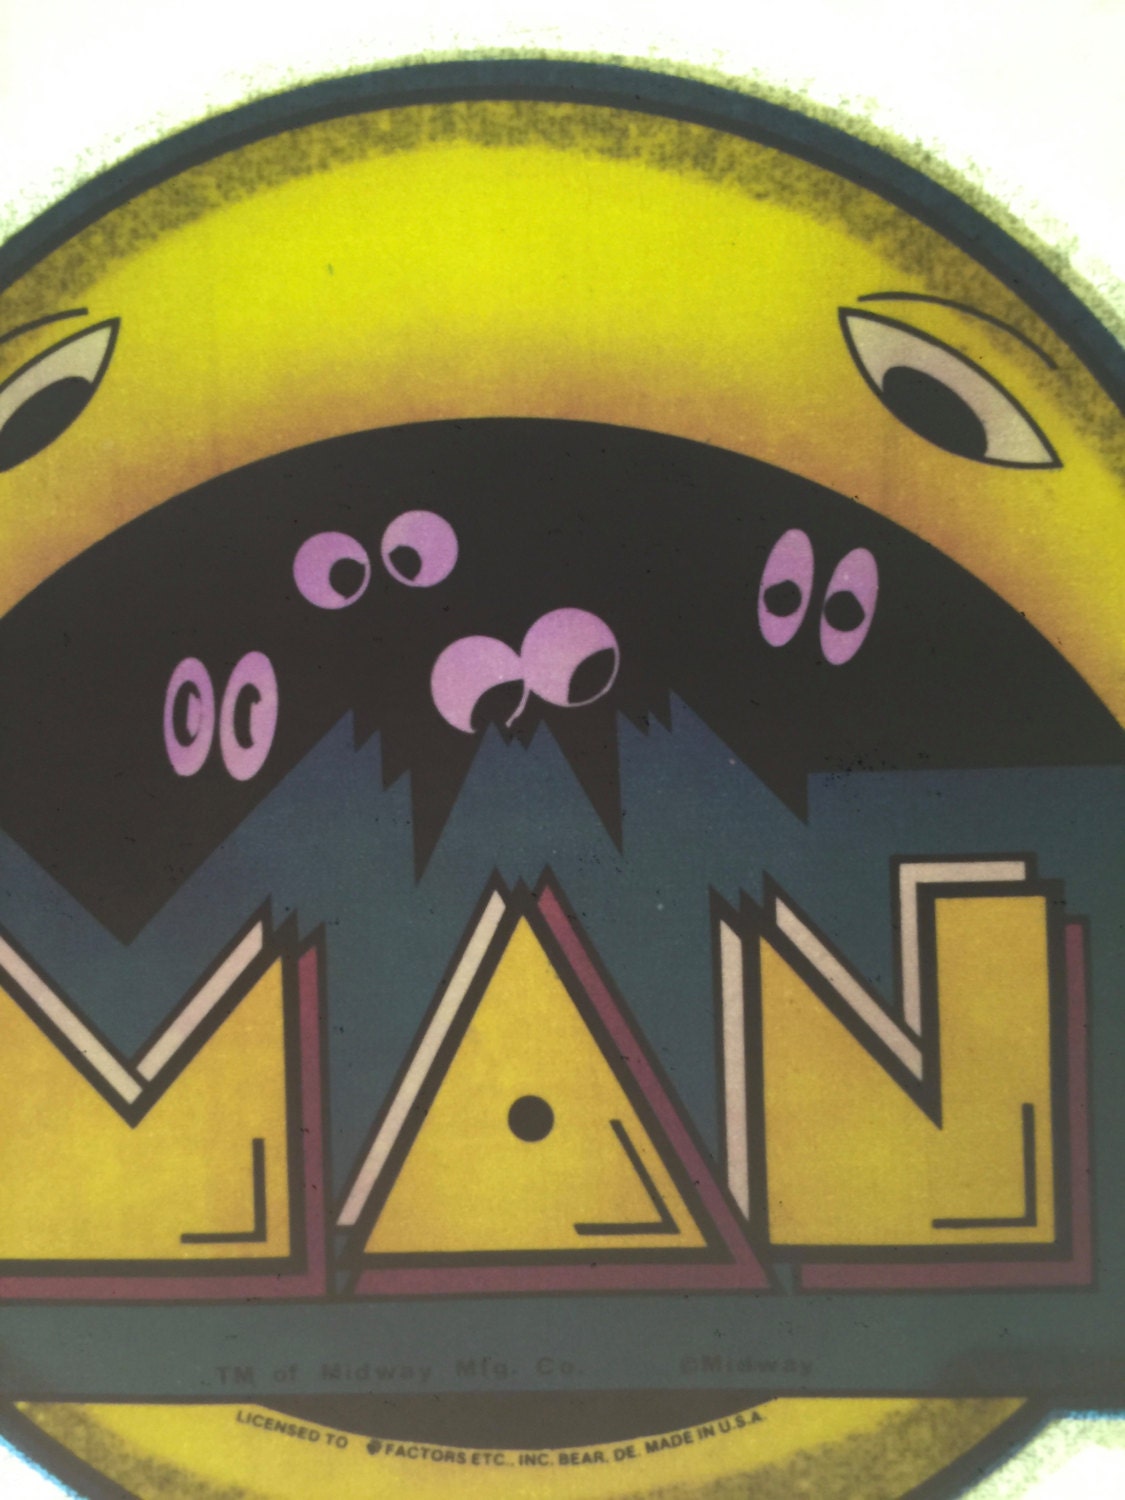 Pac-Man Fanatic Vintage Glitter Iron On Heat Transfer